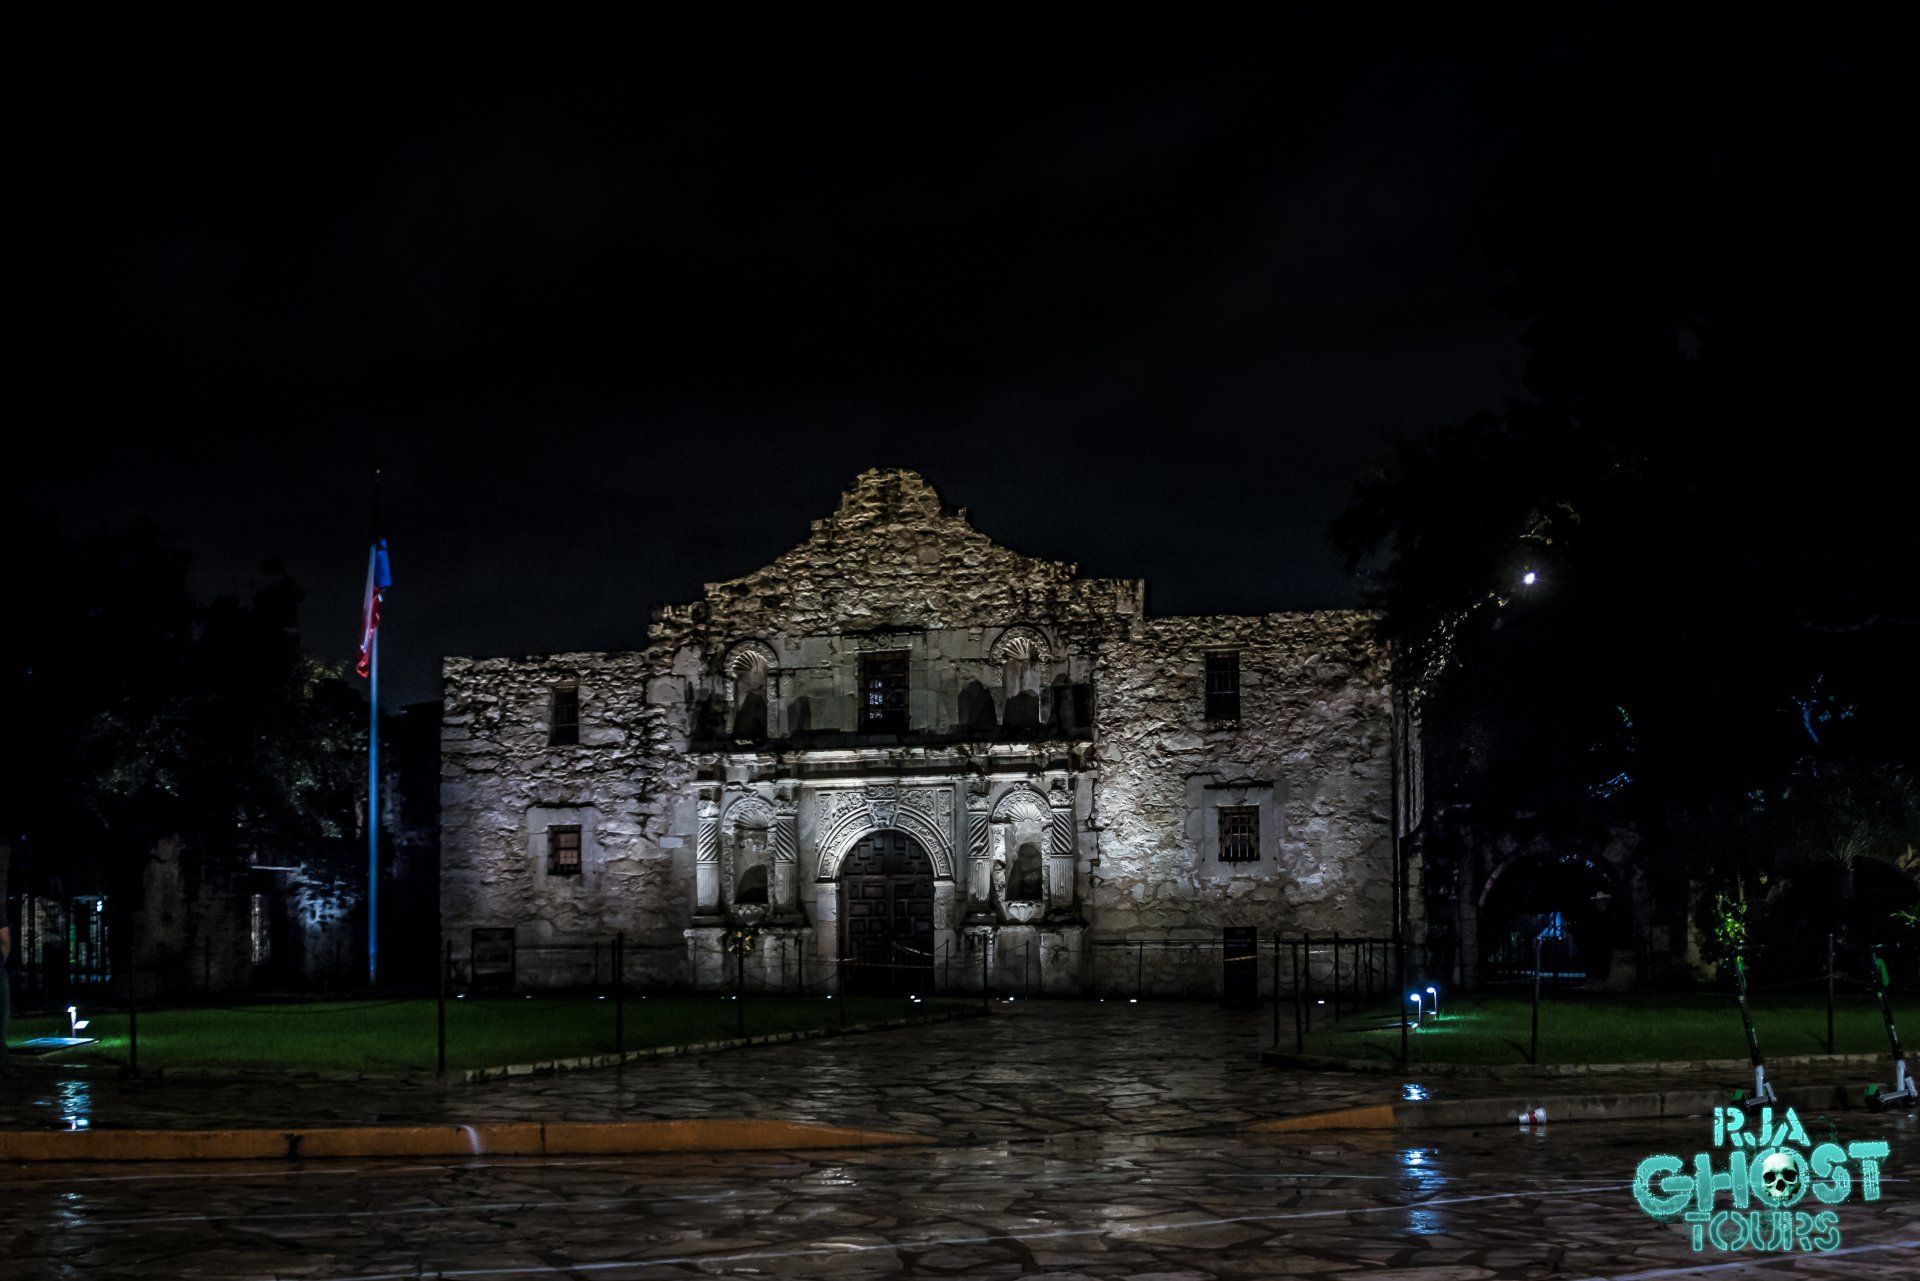 San Antonio Ghost Tours RJA GHOST TOURS®